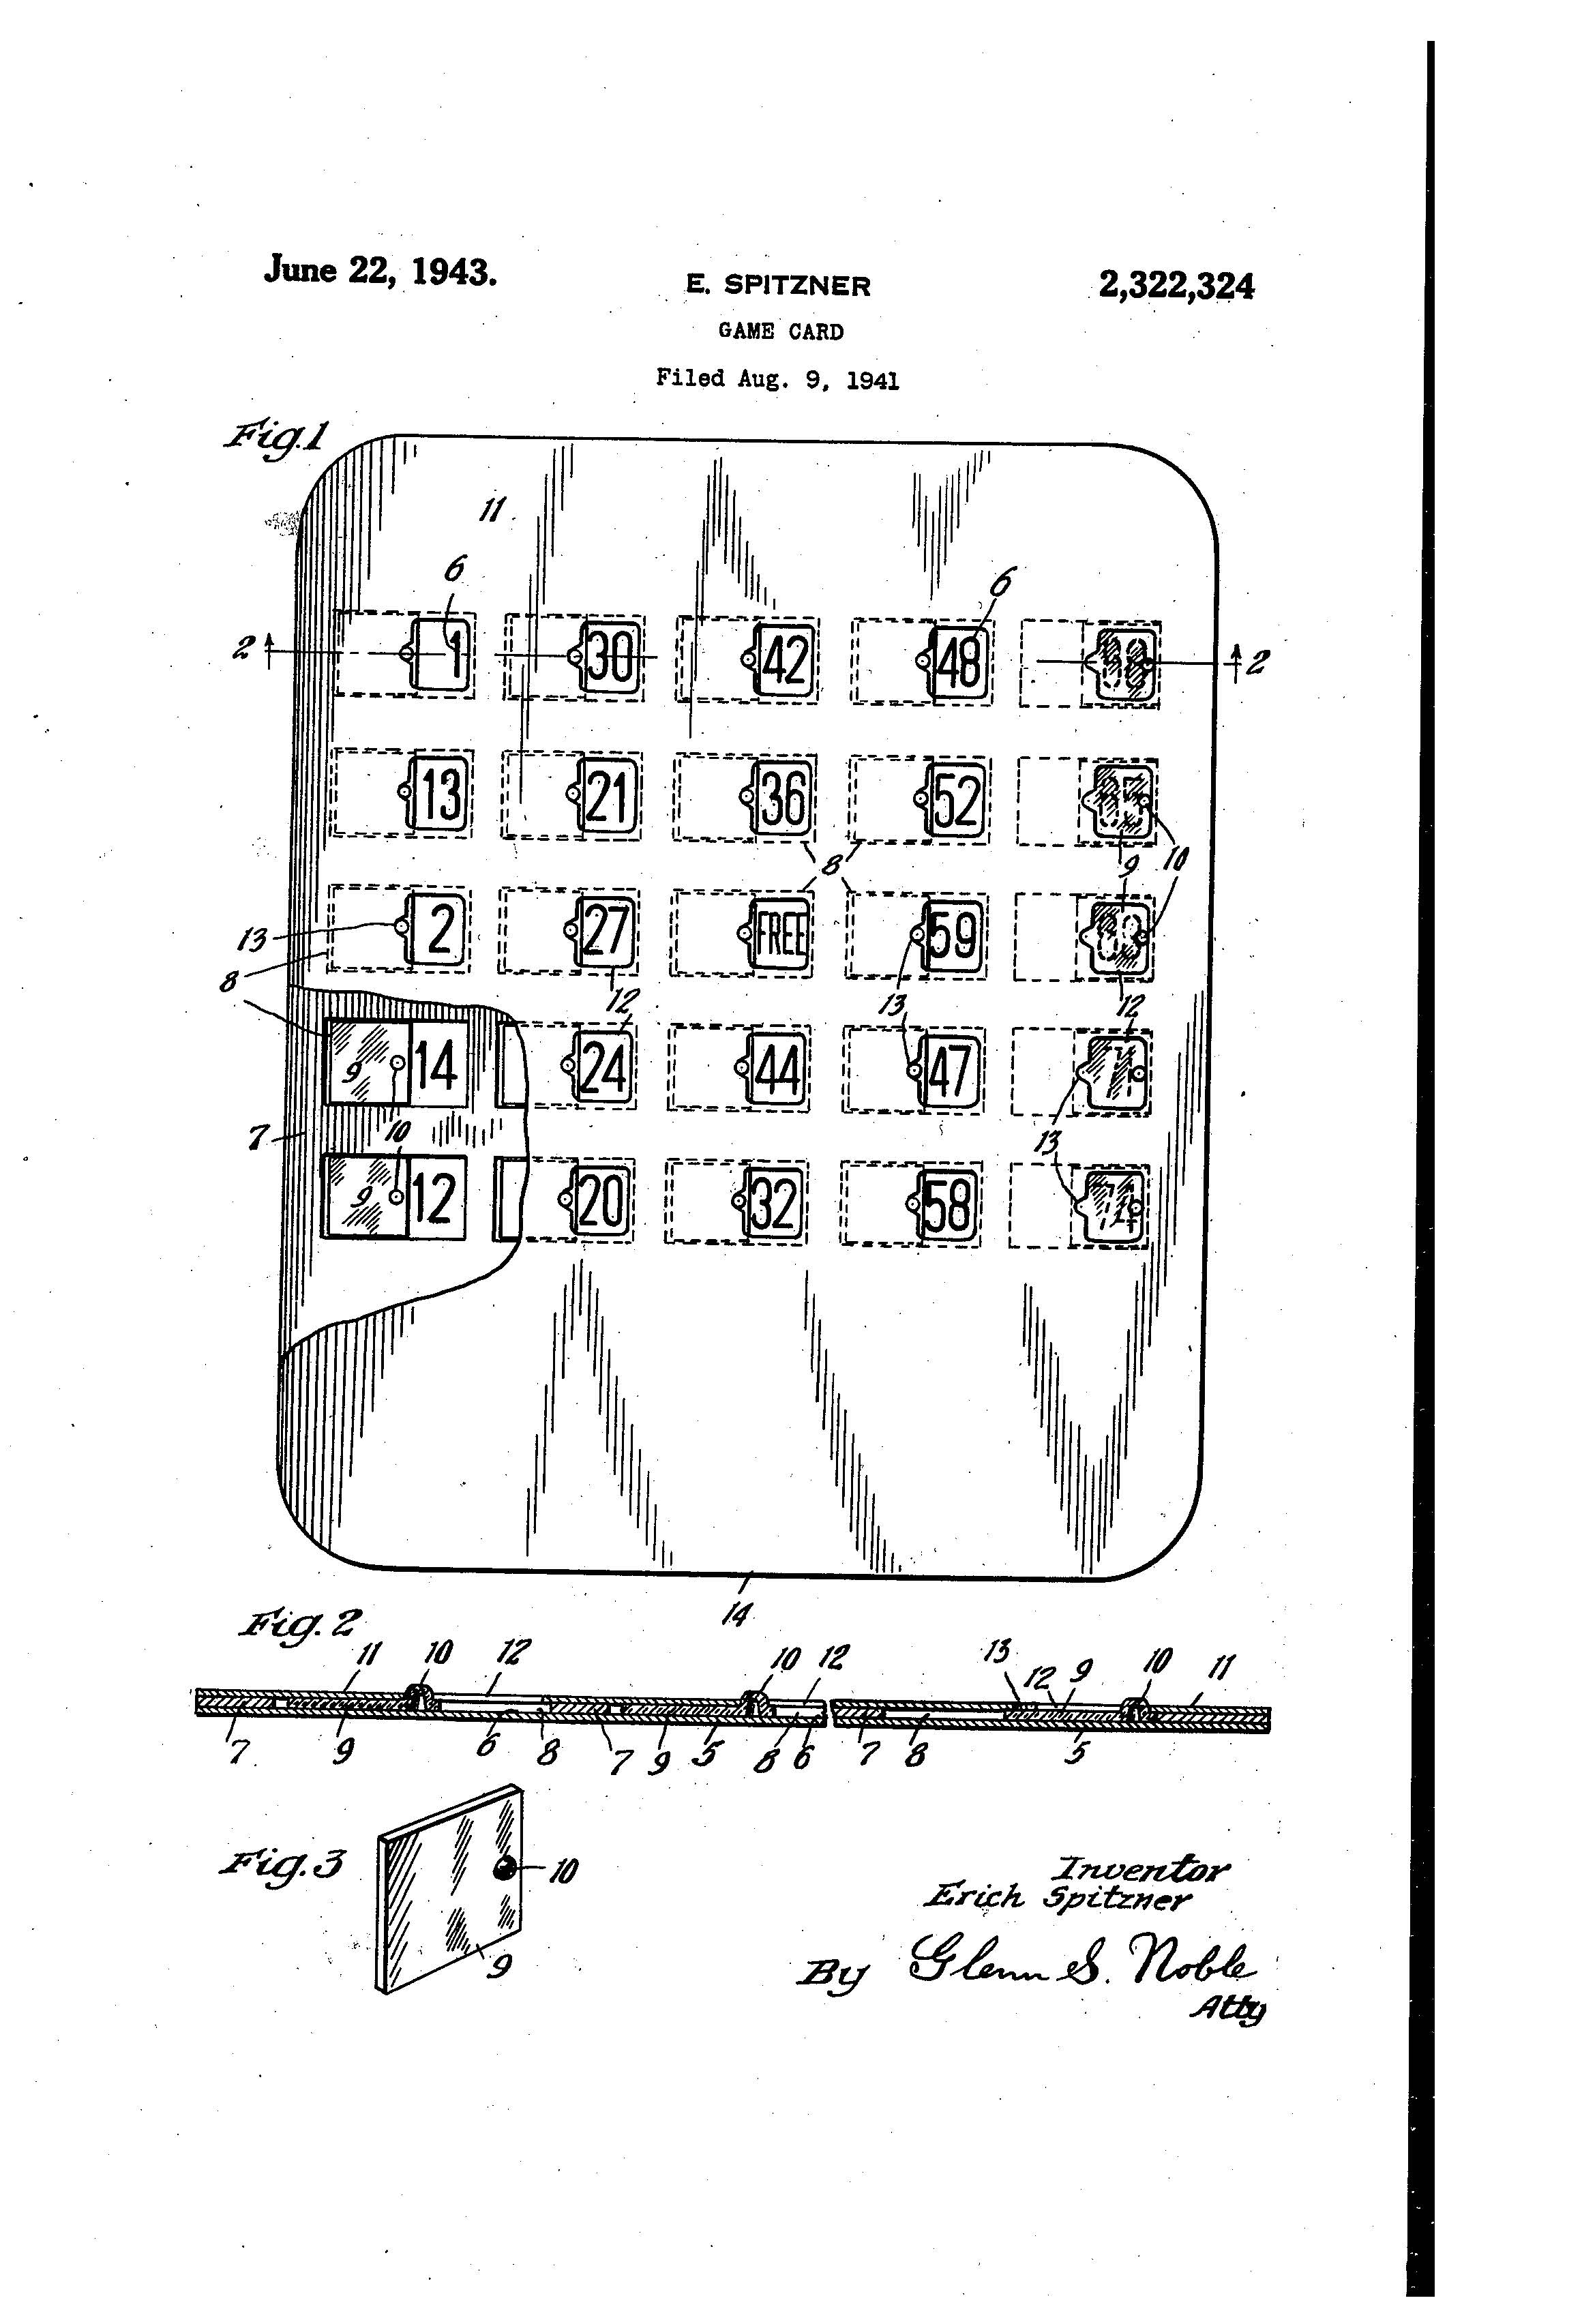 Game Card BINGO Patent